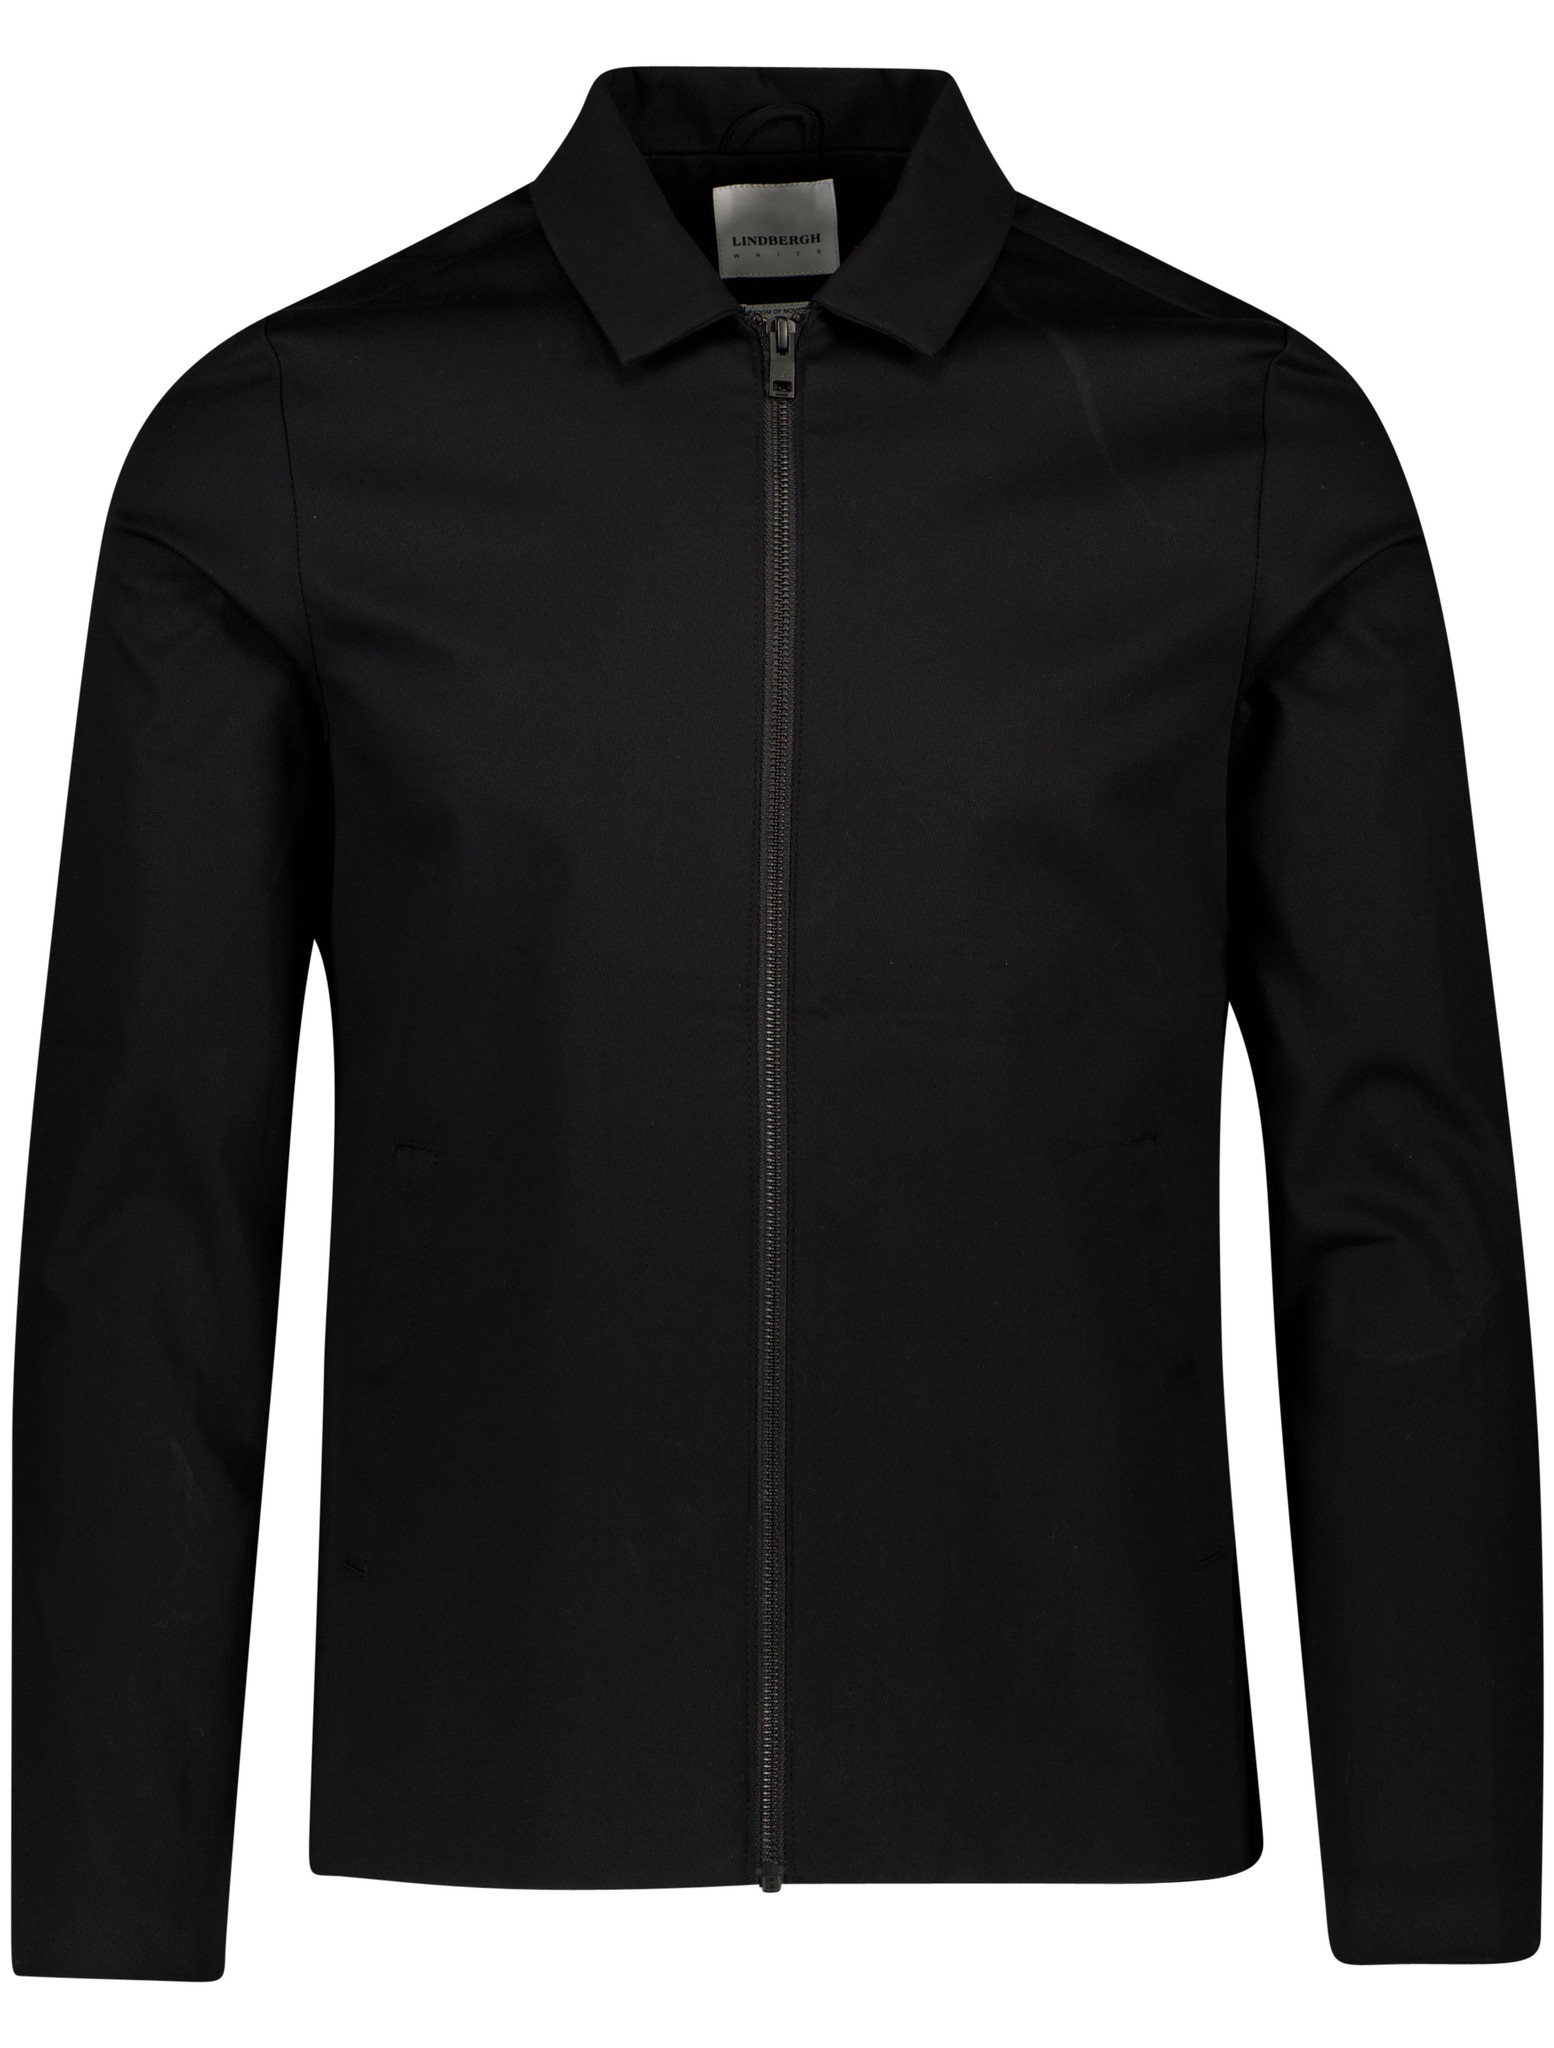 Buy Online Zip-Through Superflex Overshirt Jacket Online - LINDBERGH